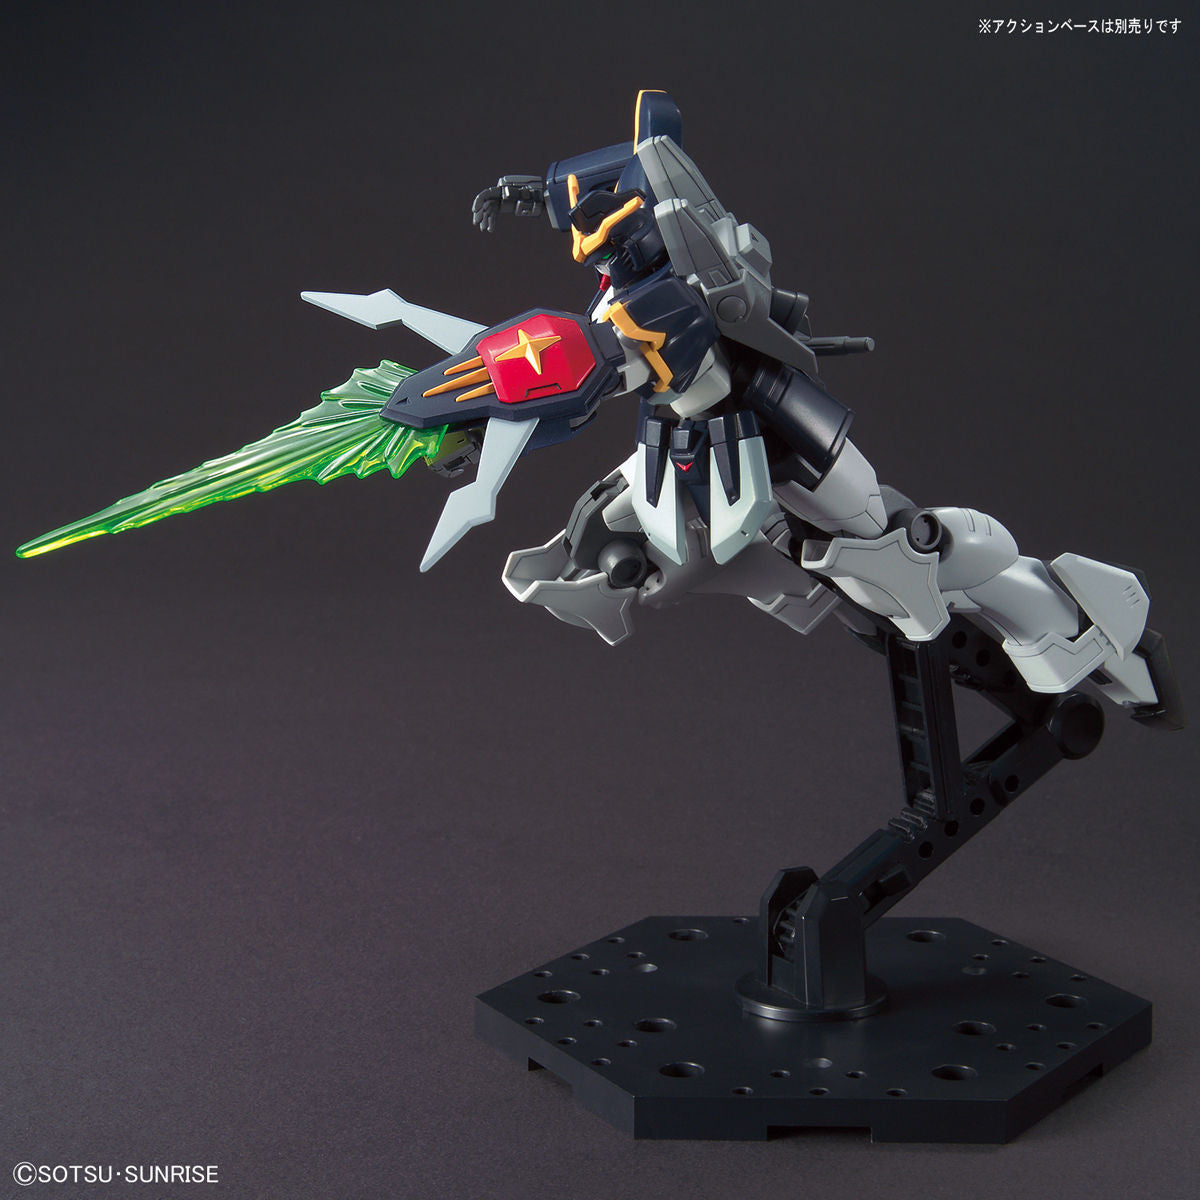 HGAC 1/144 Gundam Deathscythe - Glacier Hobbies - Bandai